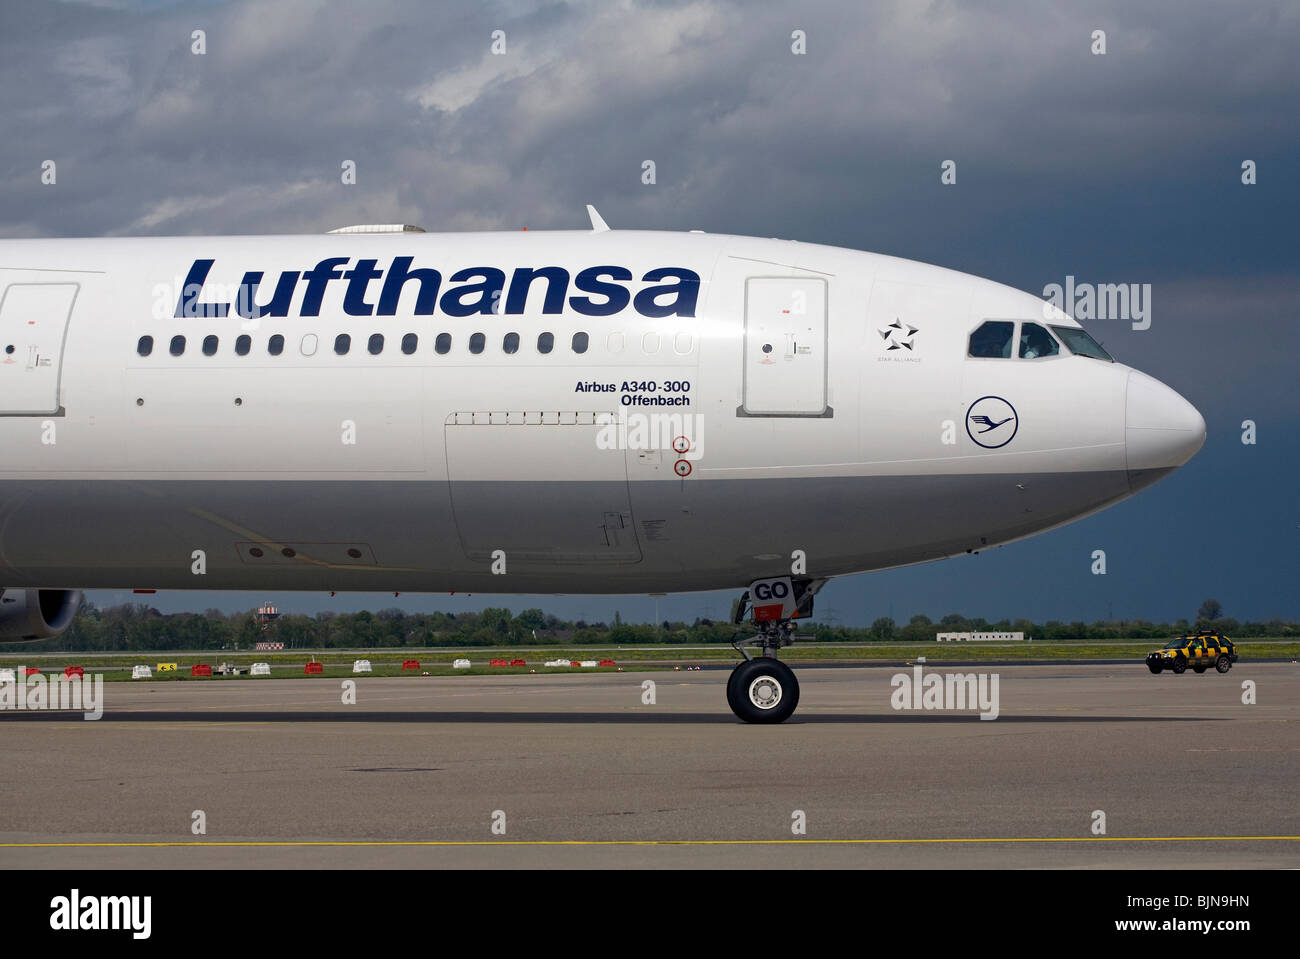 Lufthansa passenger plane, Duesseldorf, Germany Stock Photo